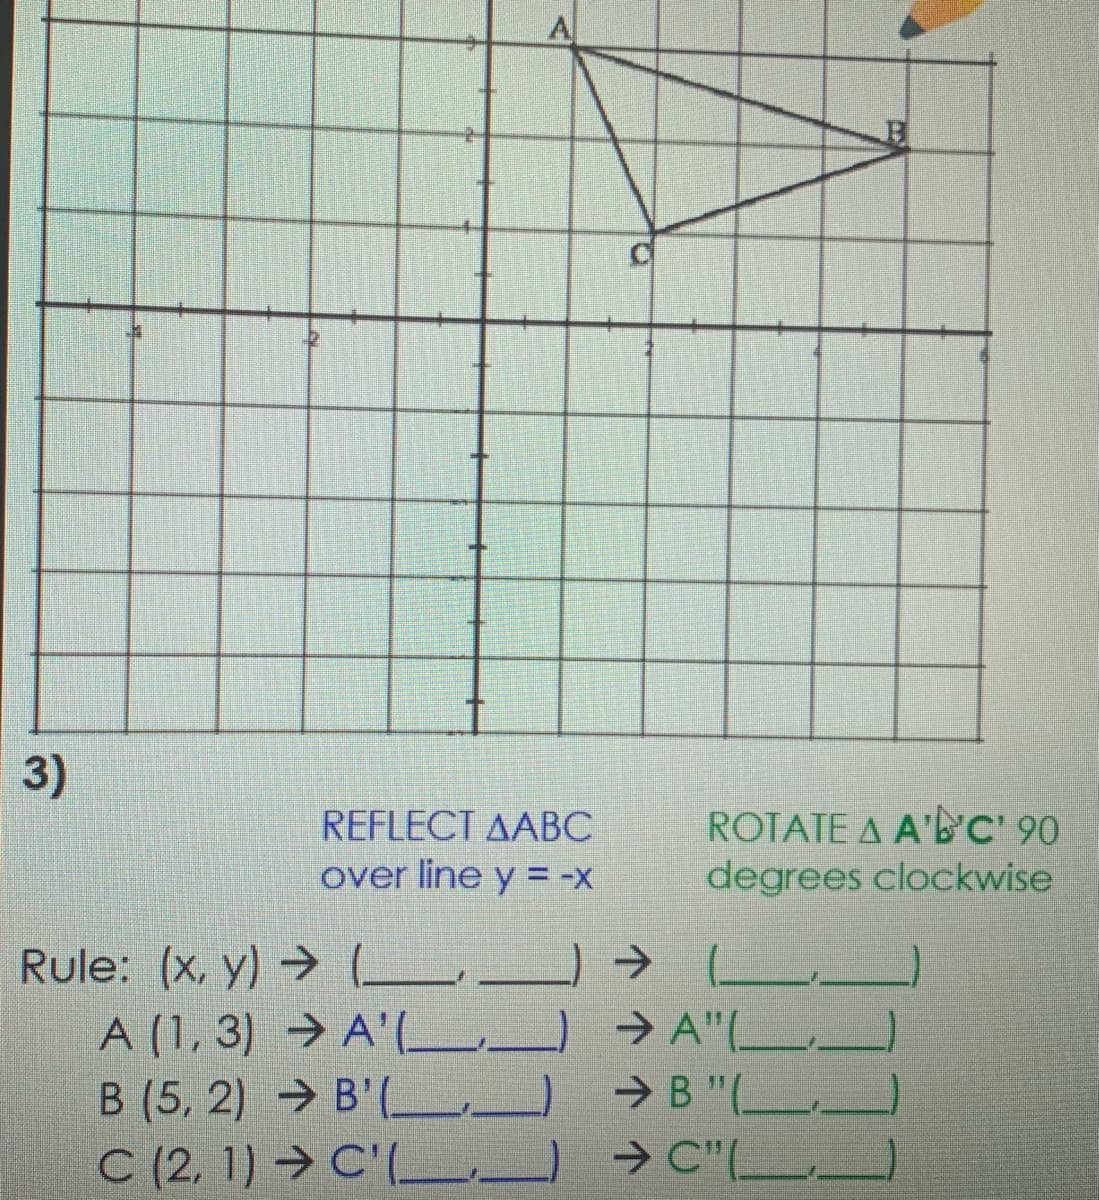 3)
ROTATE A A'B'C' 90
degrees clockwise
REFLECT AABC
over line y = -X
Rule: (x, y) → L.
A (1, 3) → A'(_ ) → A"(-
> A"(L.
B (5, 2) → B' (L) →B"(L__
> B "(_.
C (2, 1) → C'(L.
L → C"(L,)
